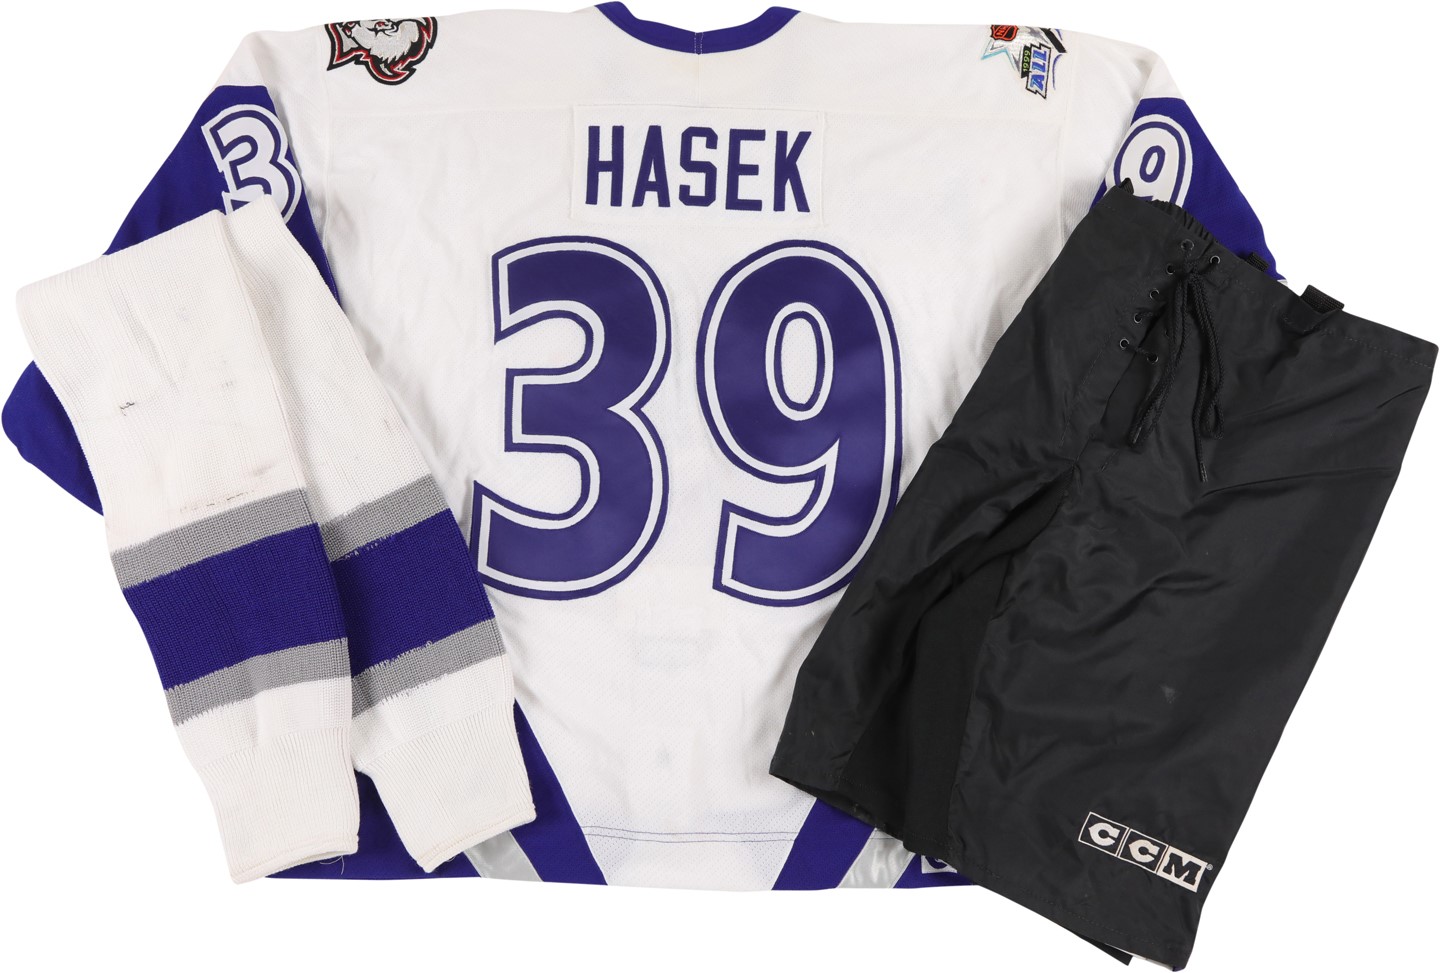 1999 Dominik Hasek NHL All-Star Game Worn Jersey, Pants and Socks